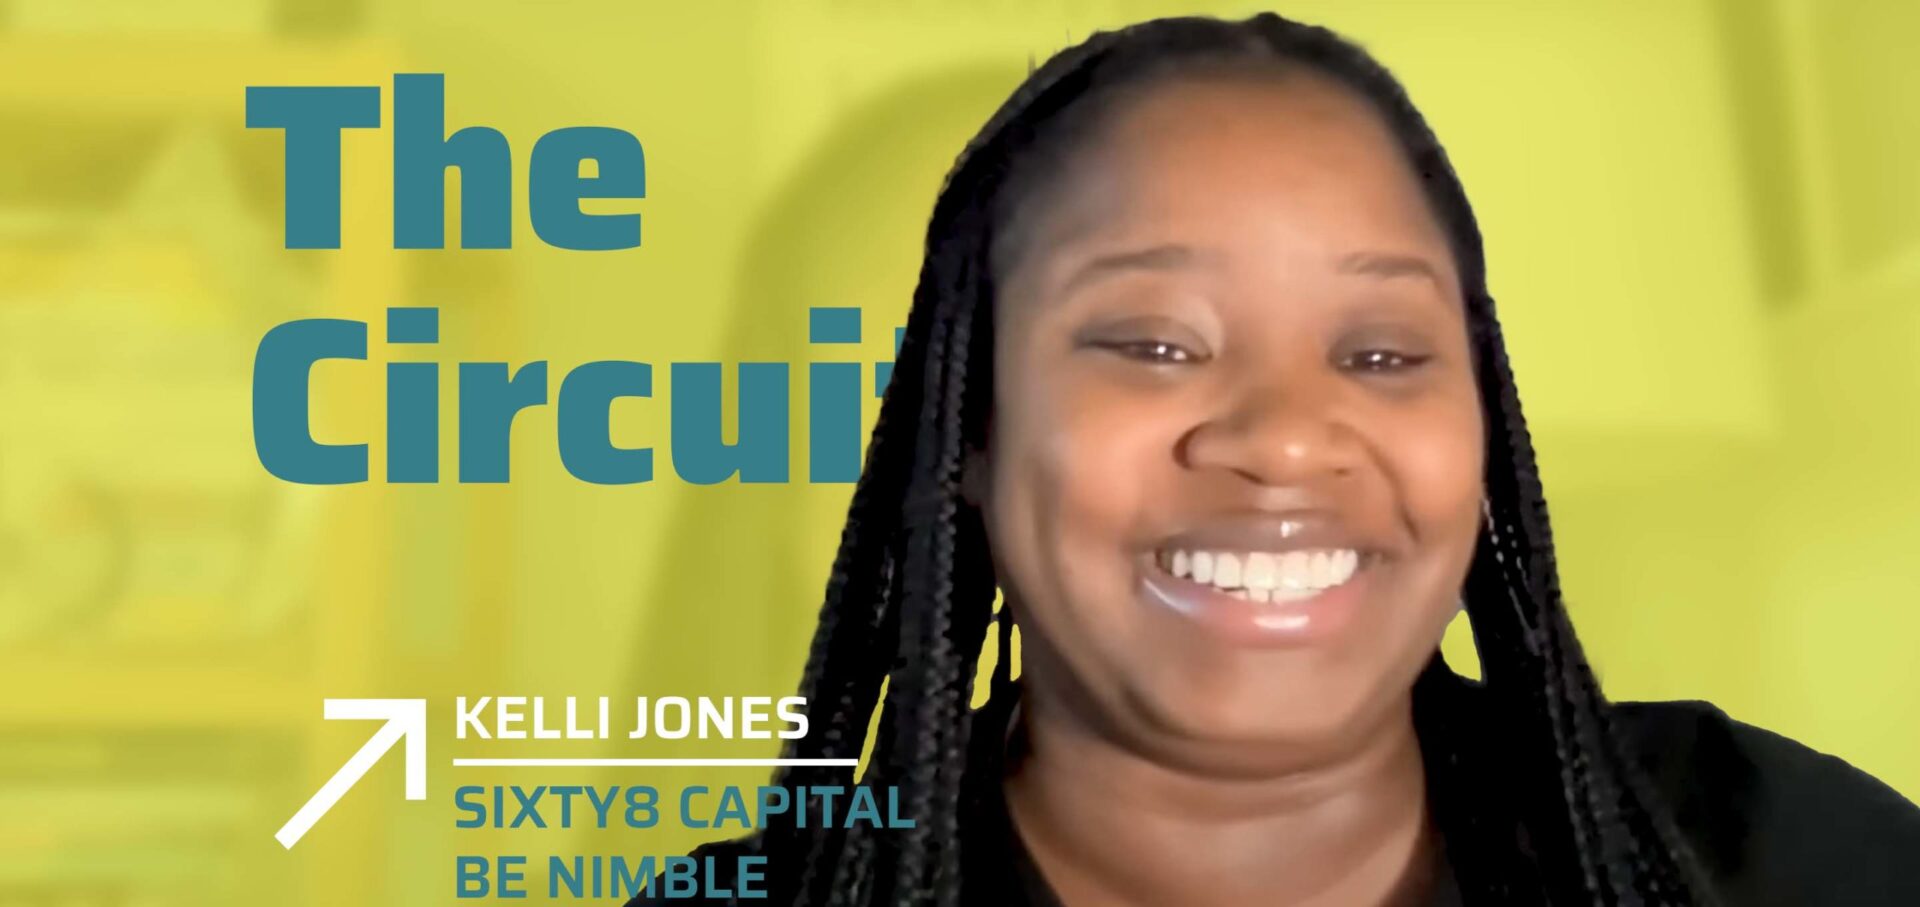 Kelli Jones | Sixty8 Capital + Be Nimble: Shining a Light on the Undercapitalized